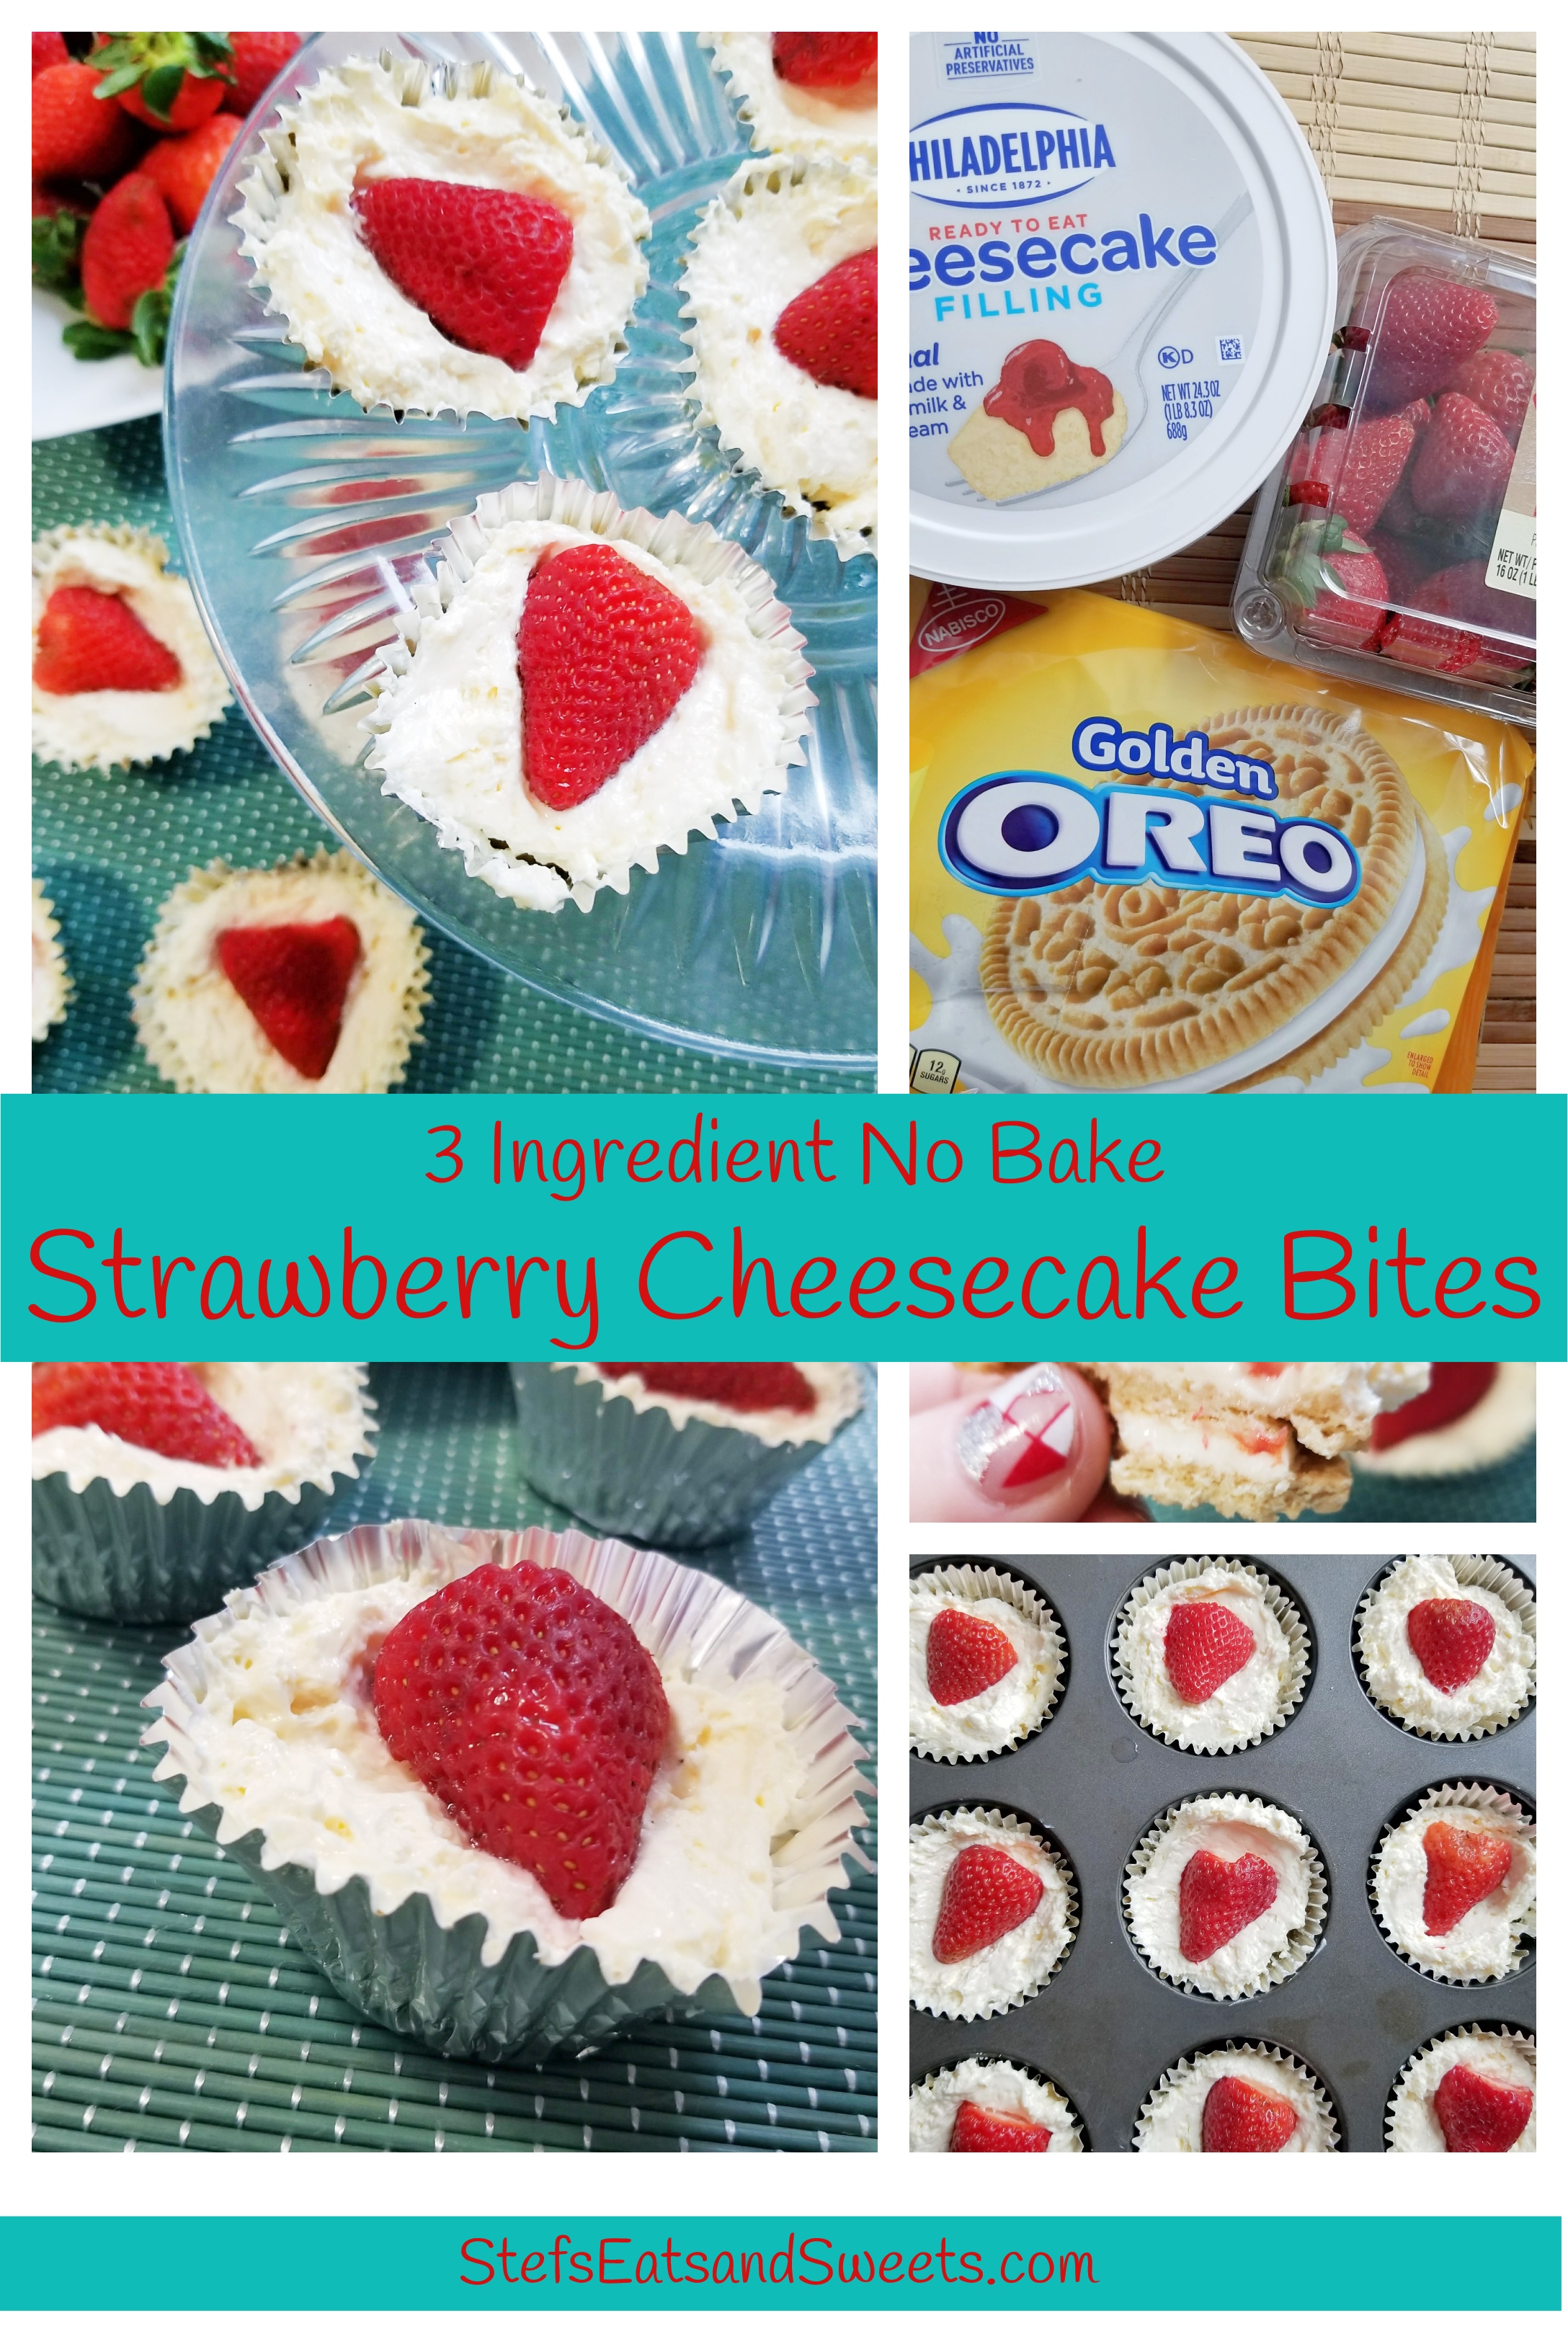 strawberry cheesecake bites collage blog.jpg